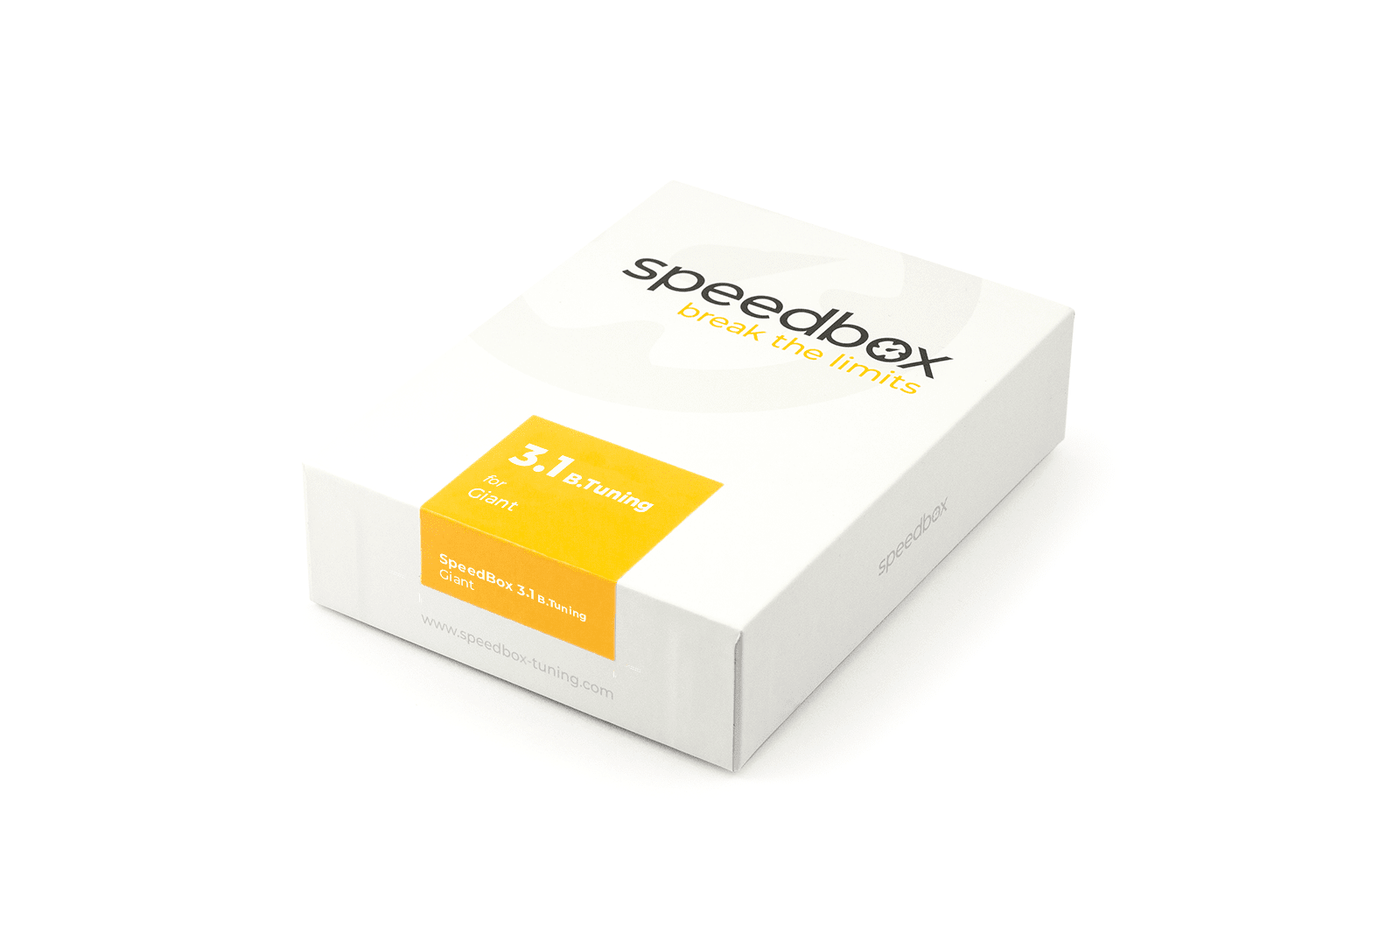 SpeedBox 3.1 B. Tuning for Giant (RideControl Go)